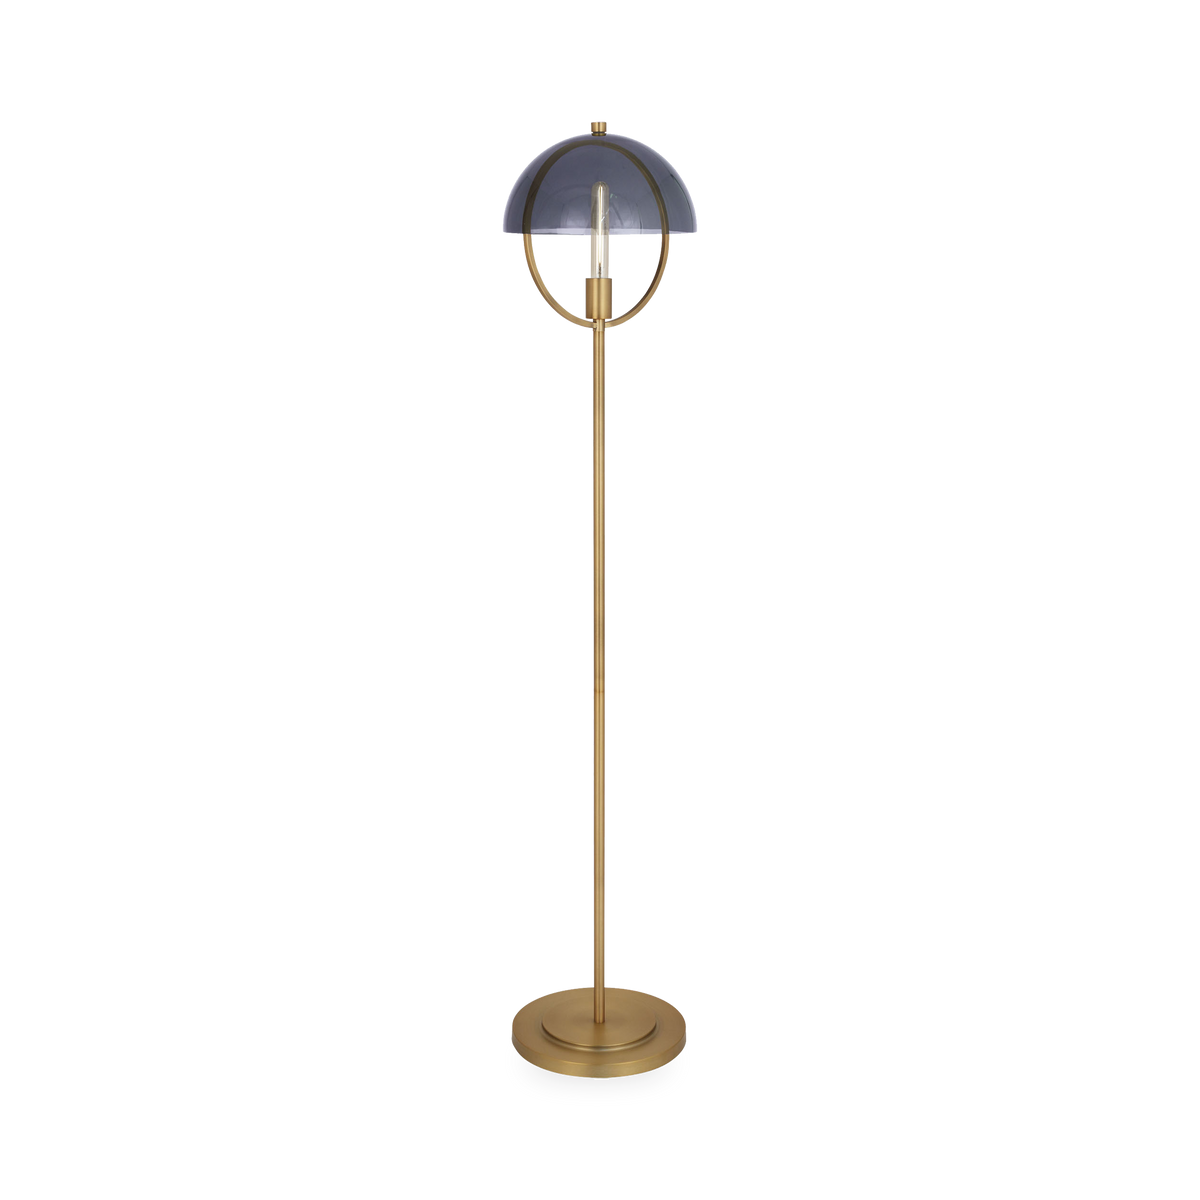 Copernica Floor Lamp